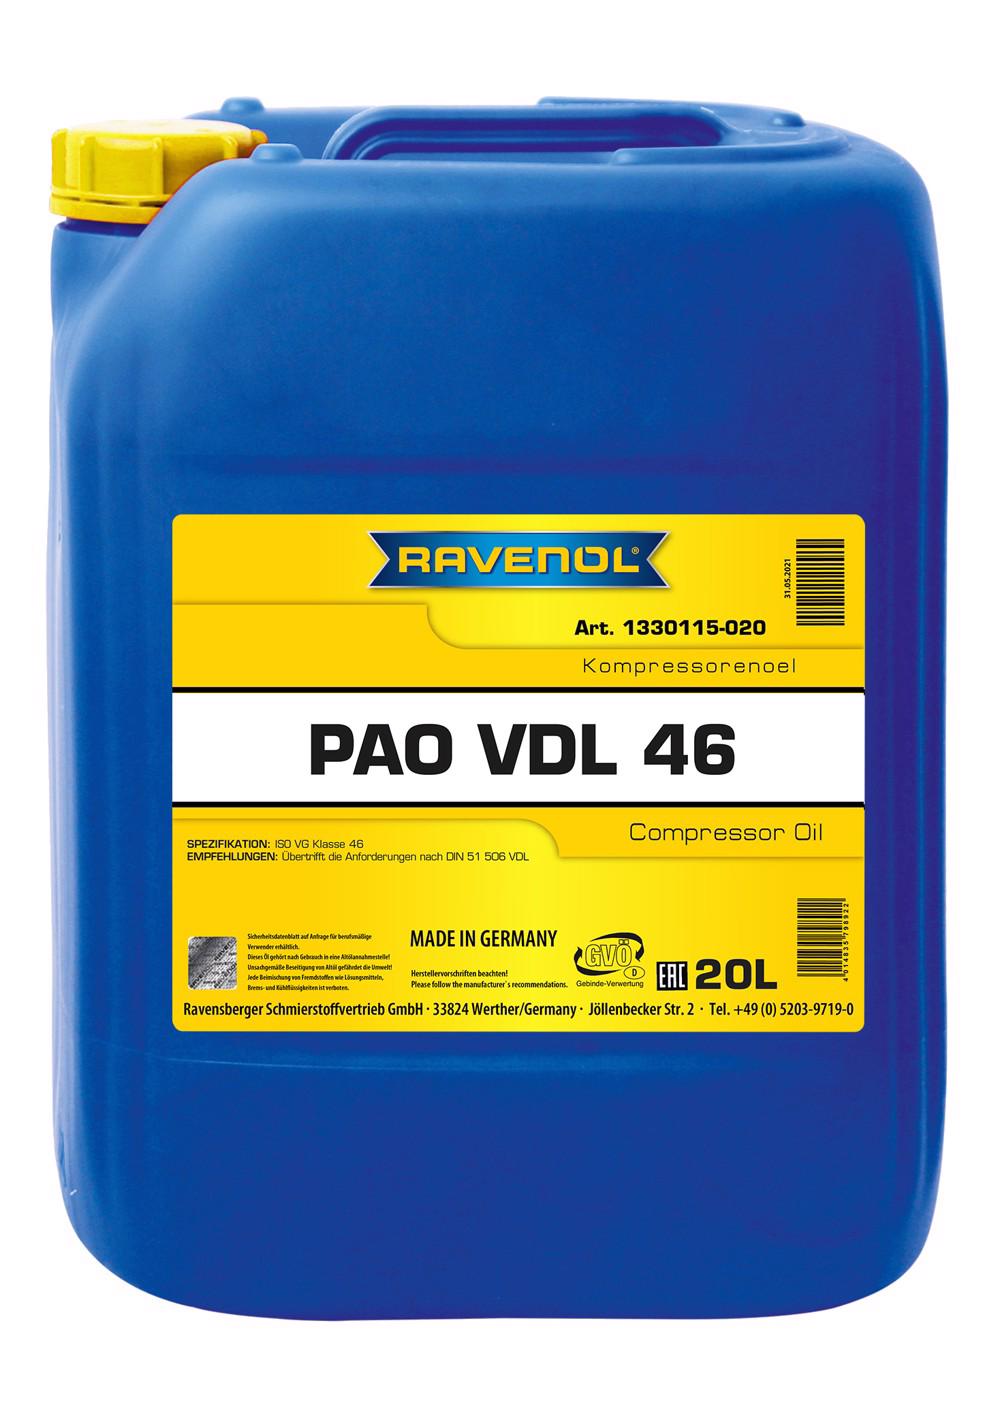 RAVENOL Kompressorenoel PAO VDL 46  20 L